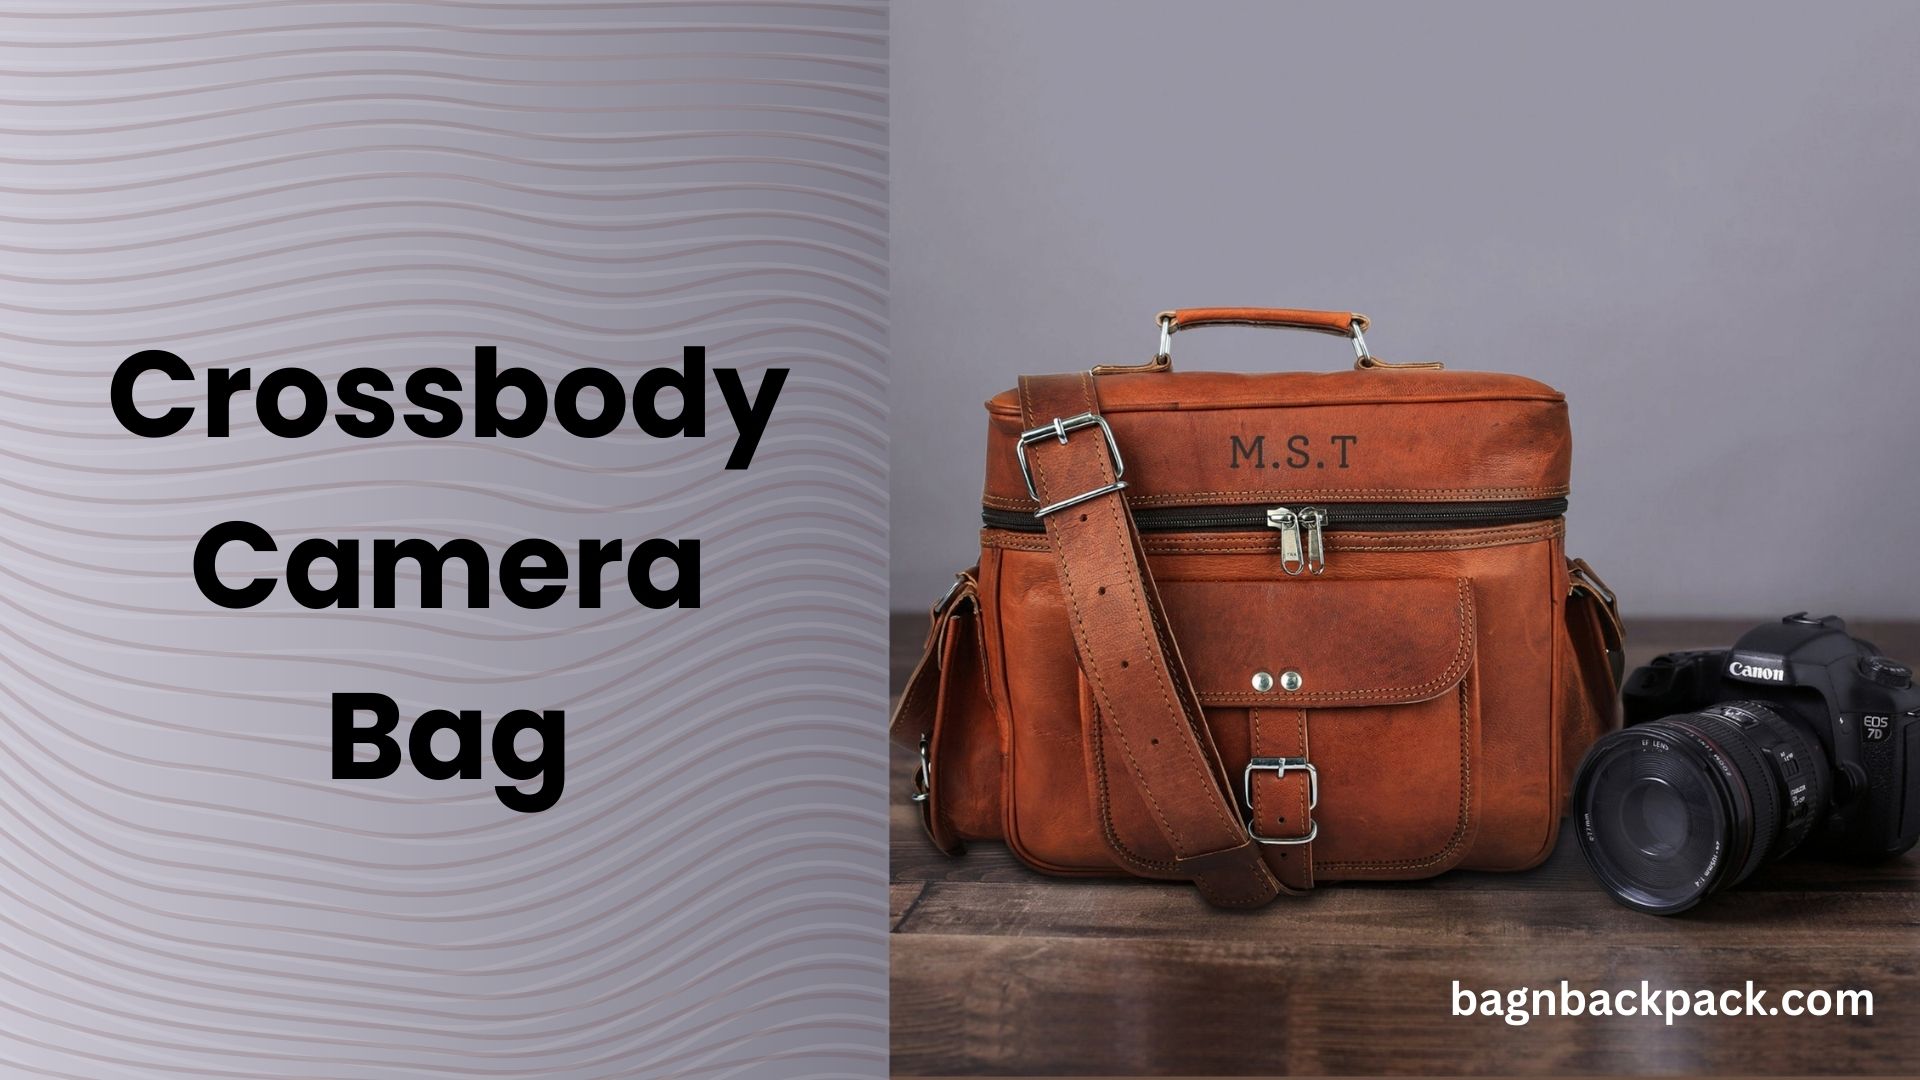 Crossbody Camera Bag